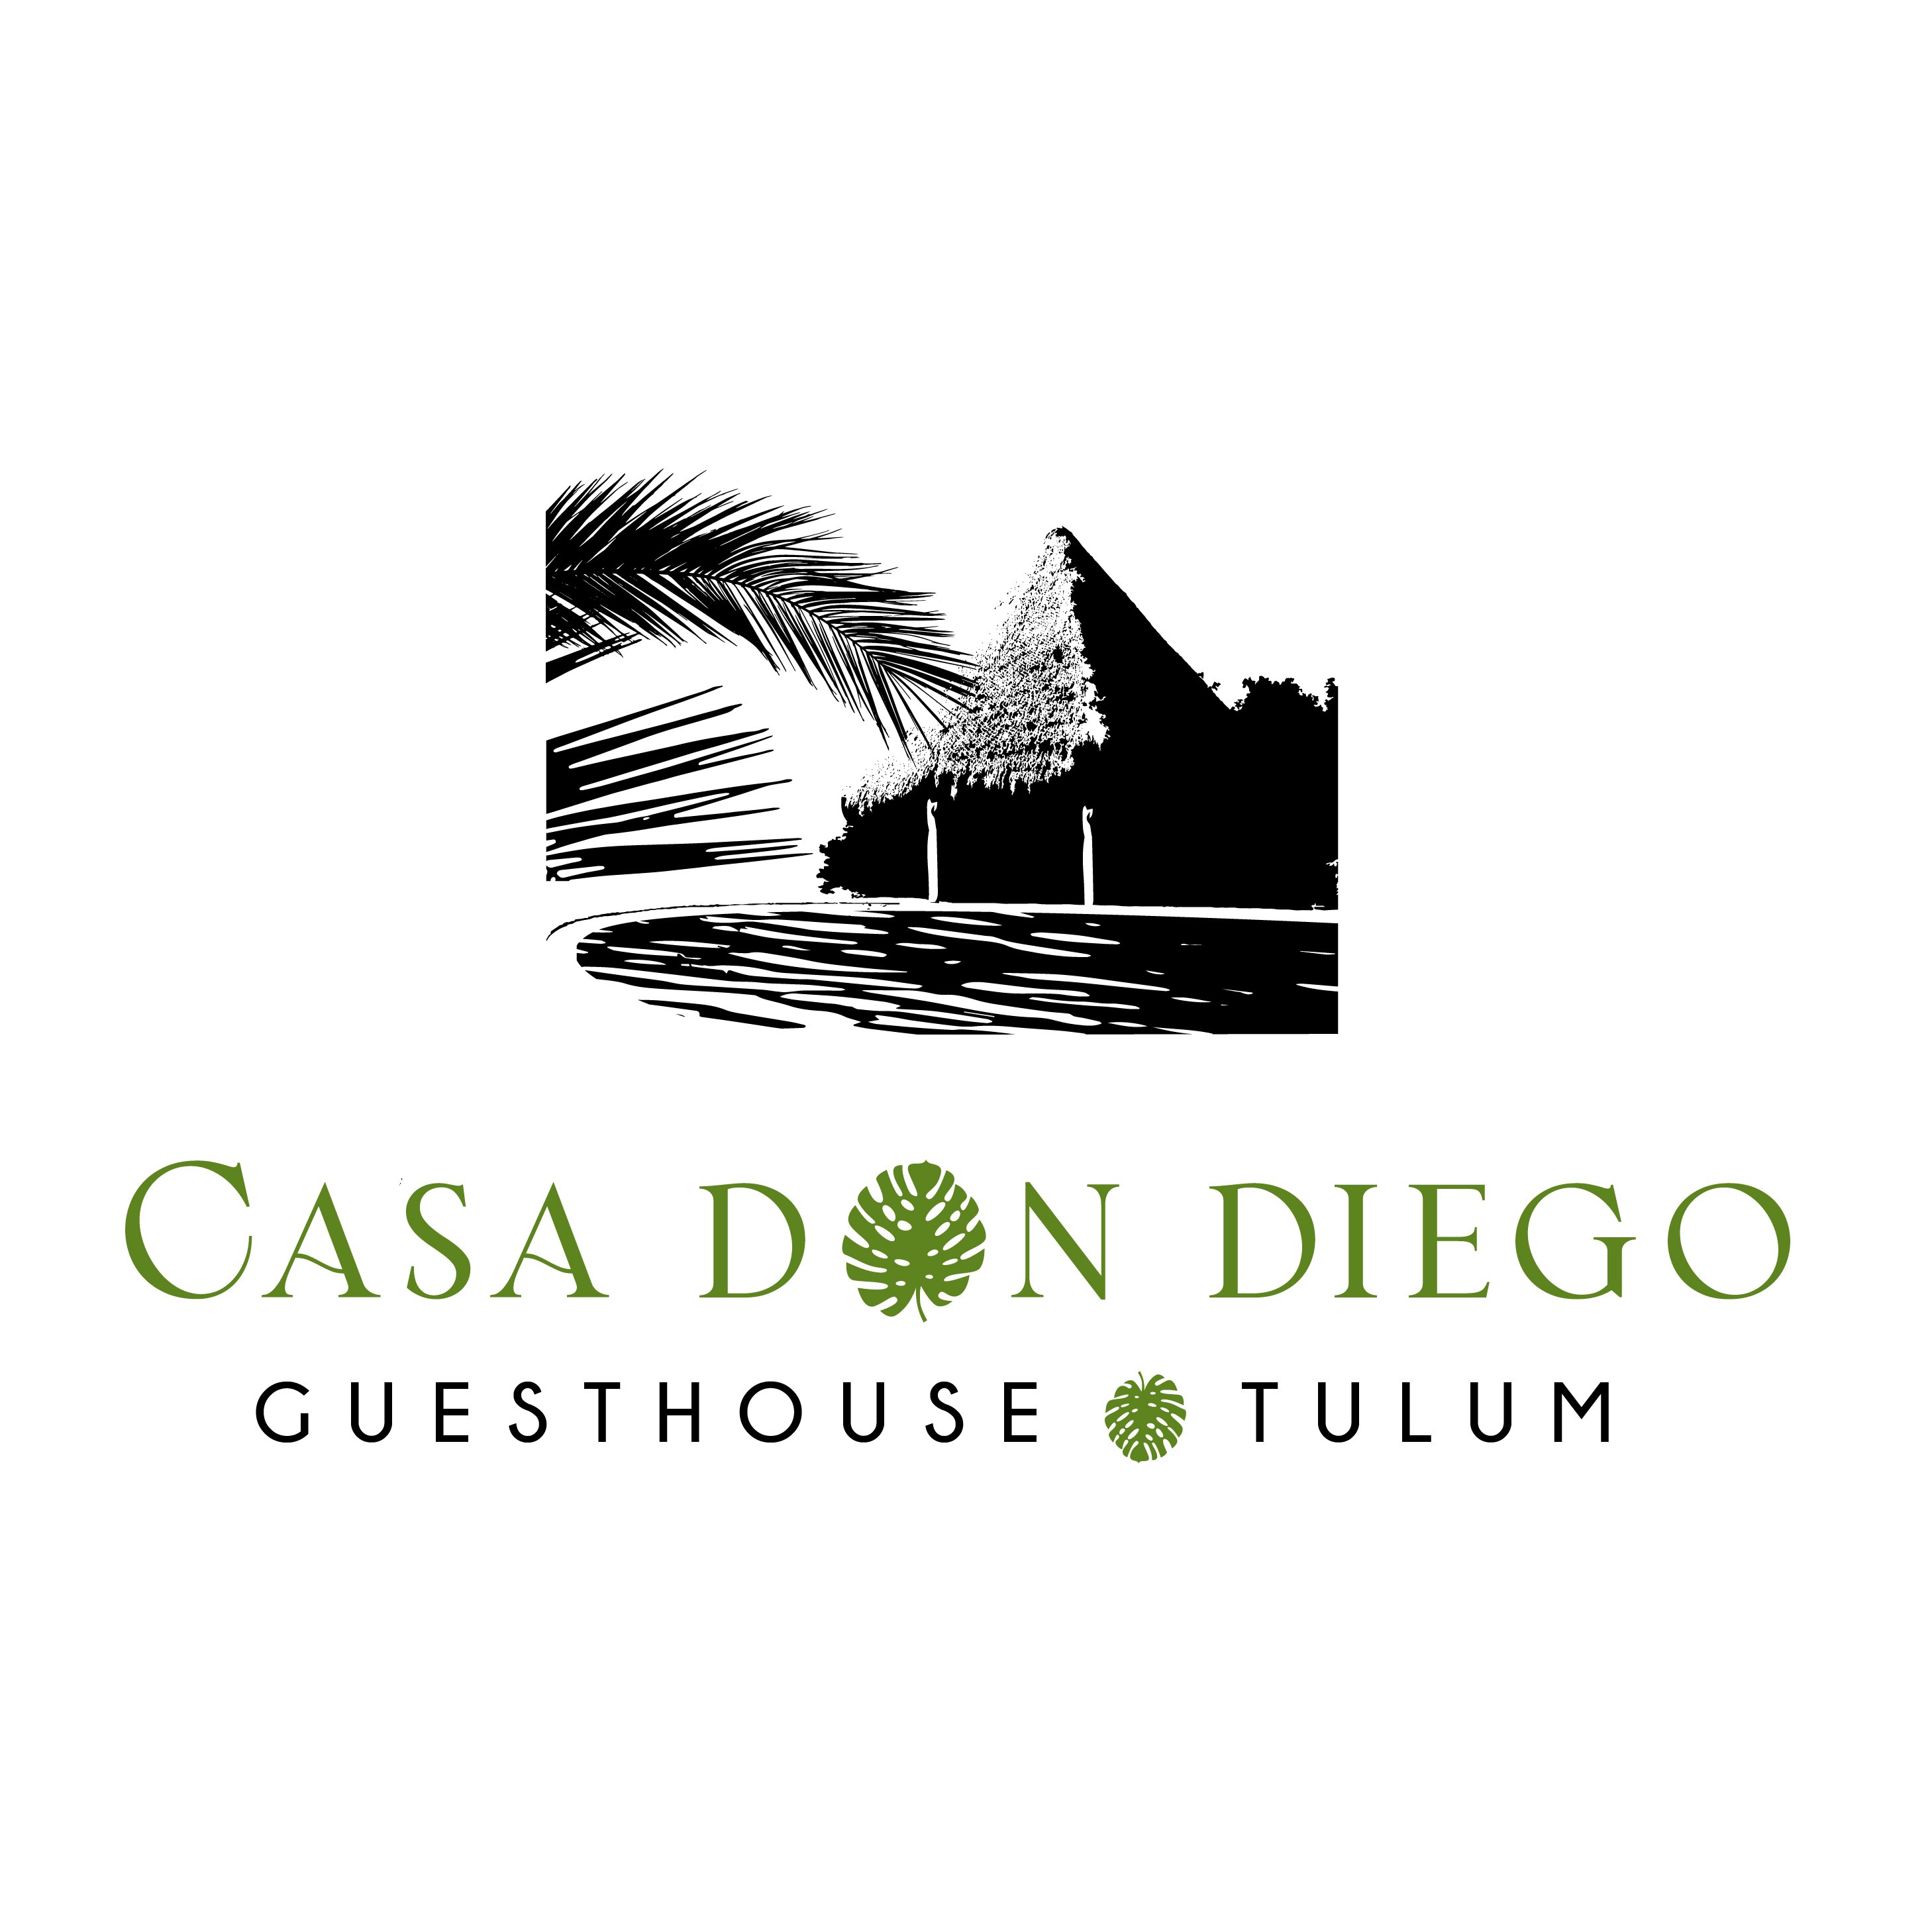 Casa Don Diego Tulum